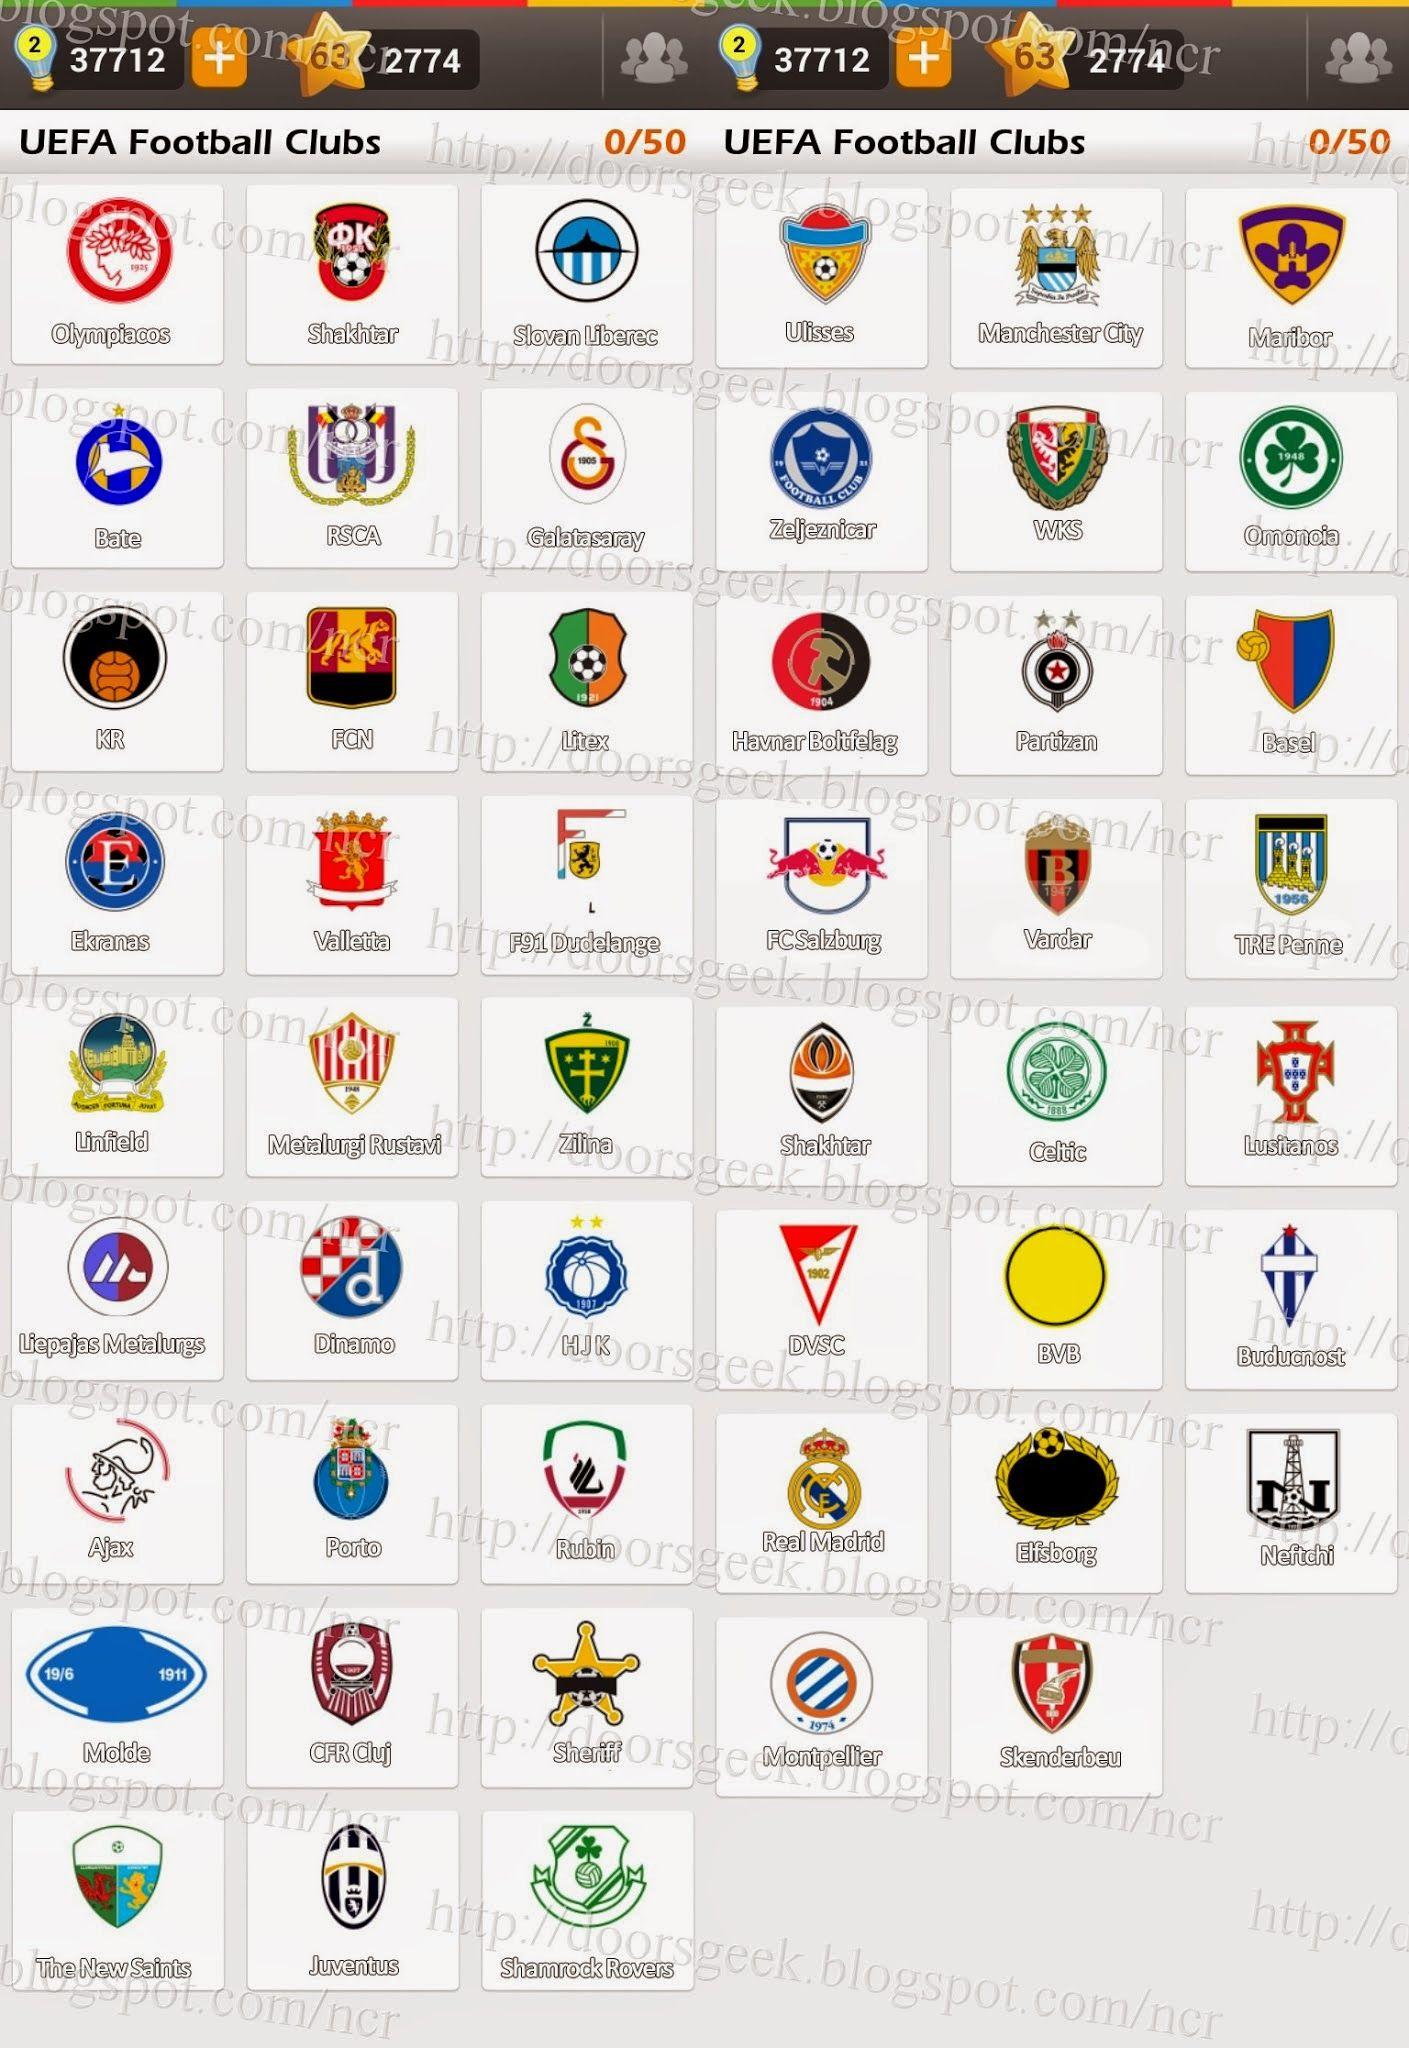 Clubs Logo - Logo Game: Guess the Brand [Bonus] UEFA Football Clubs ~ Doors Geek